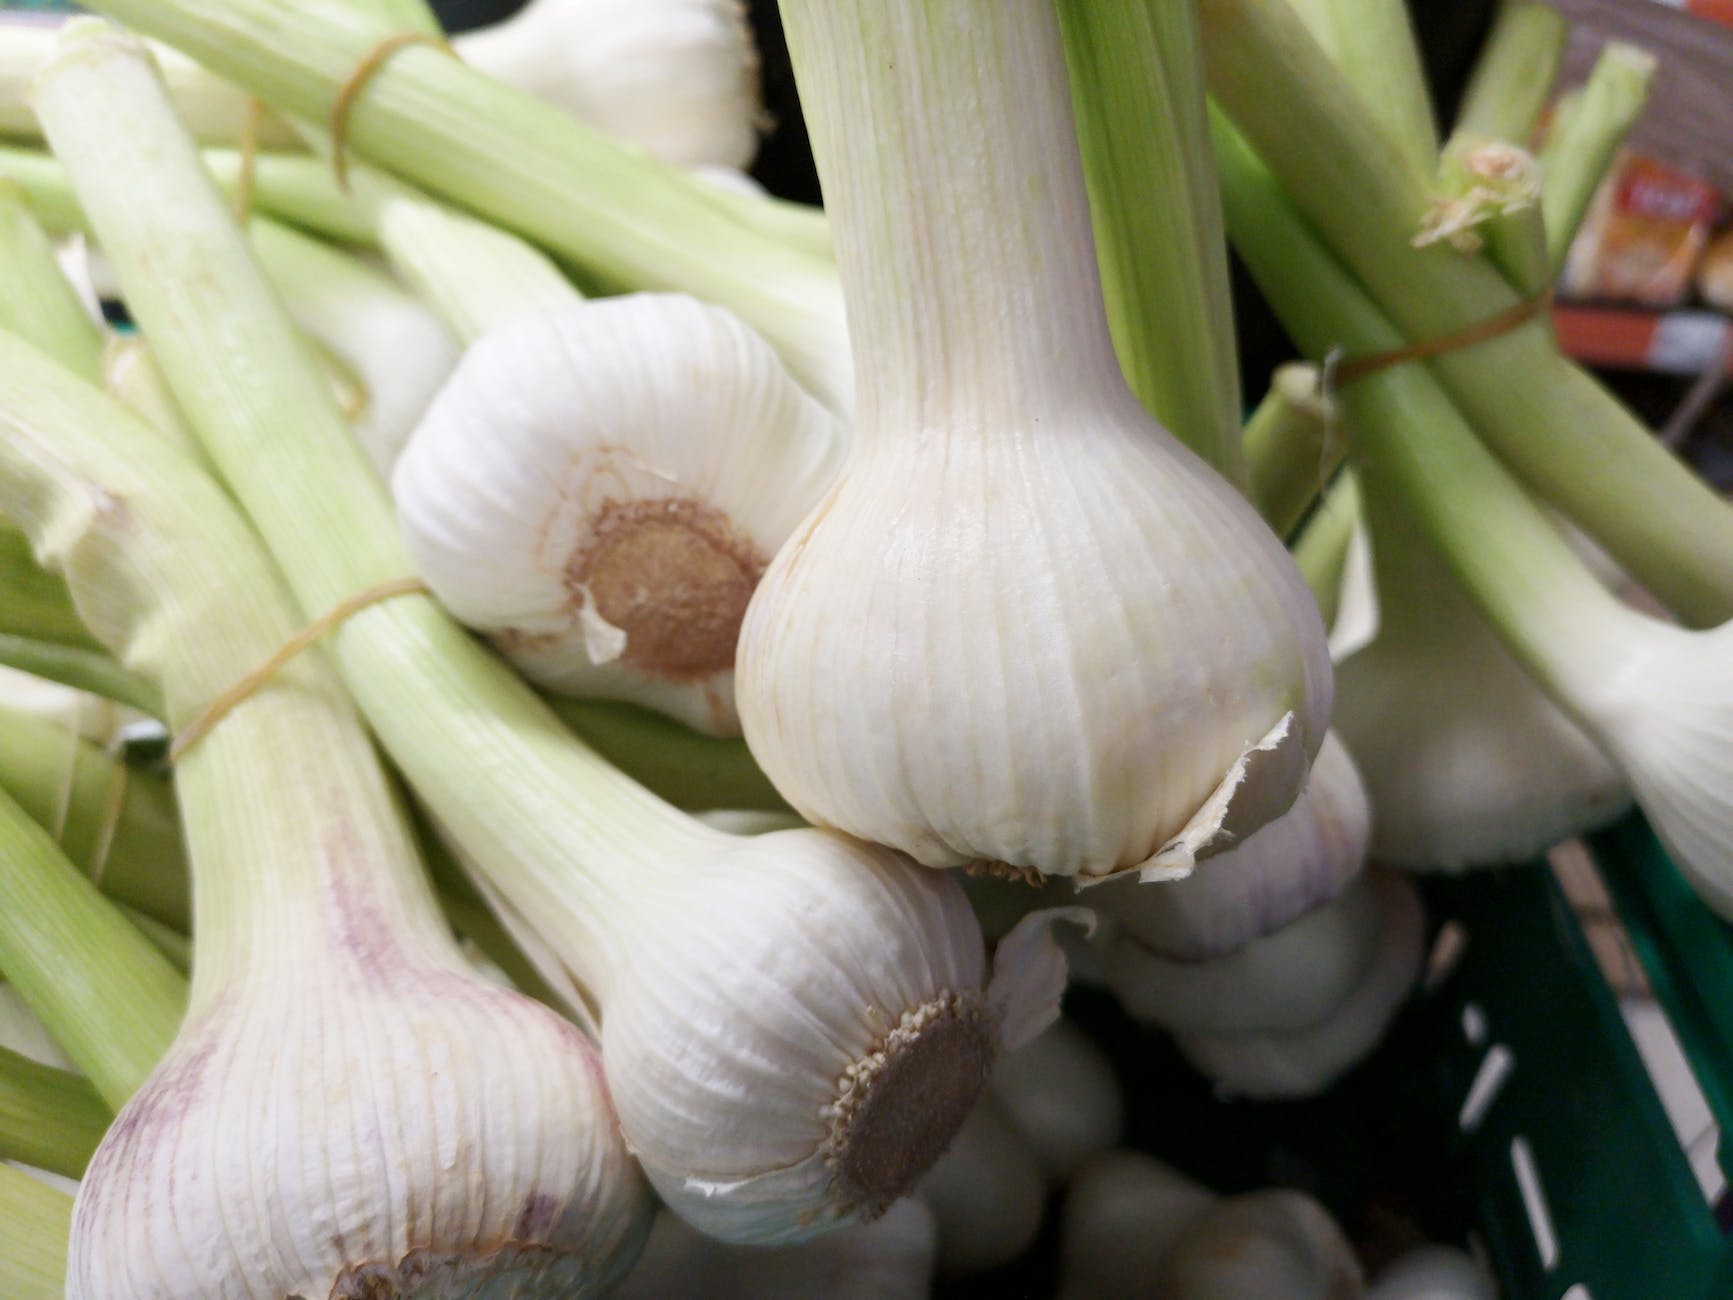 photo of white garlic bulbs